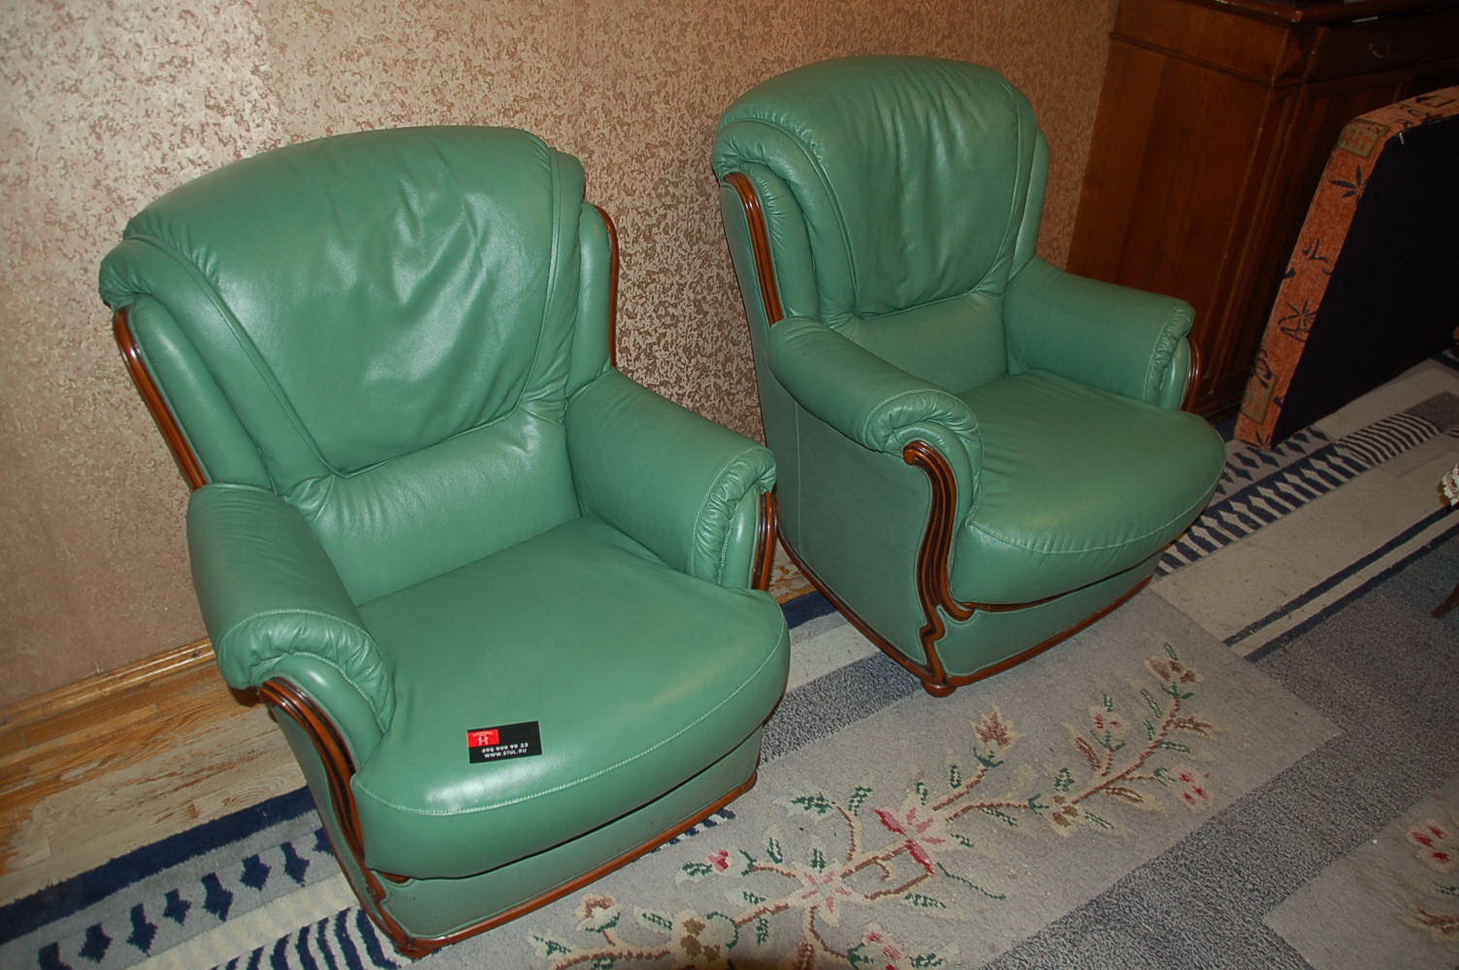 Улица Горчакова - пошив чехлов на стулья, материал жаккард